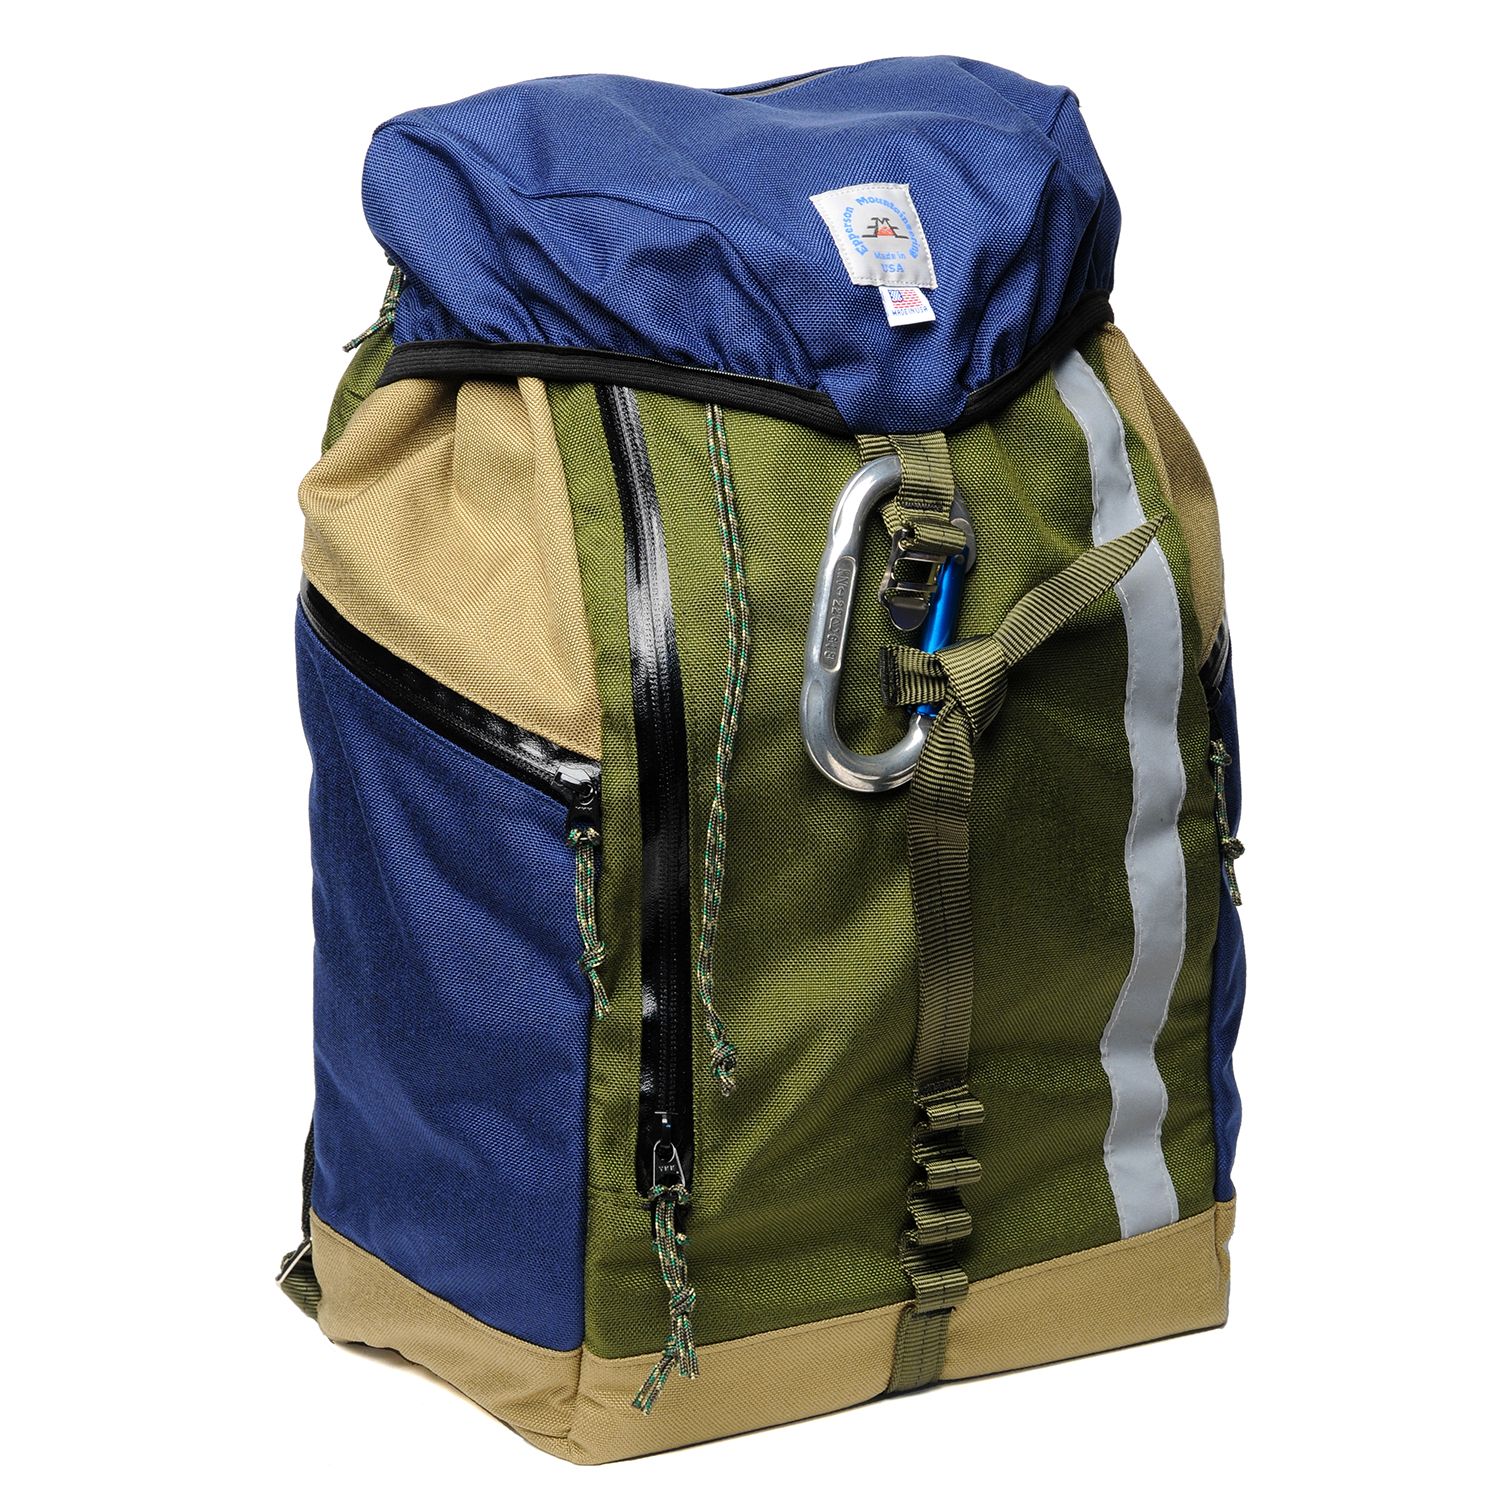 Epperson Mountaineering Handbag - Accessories